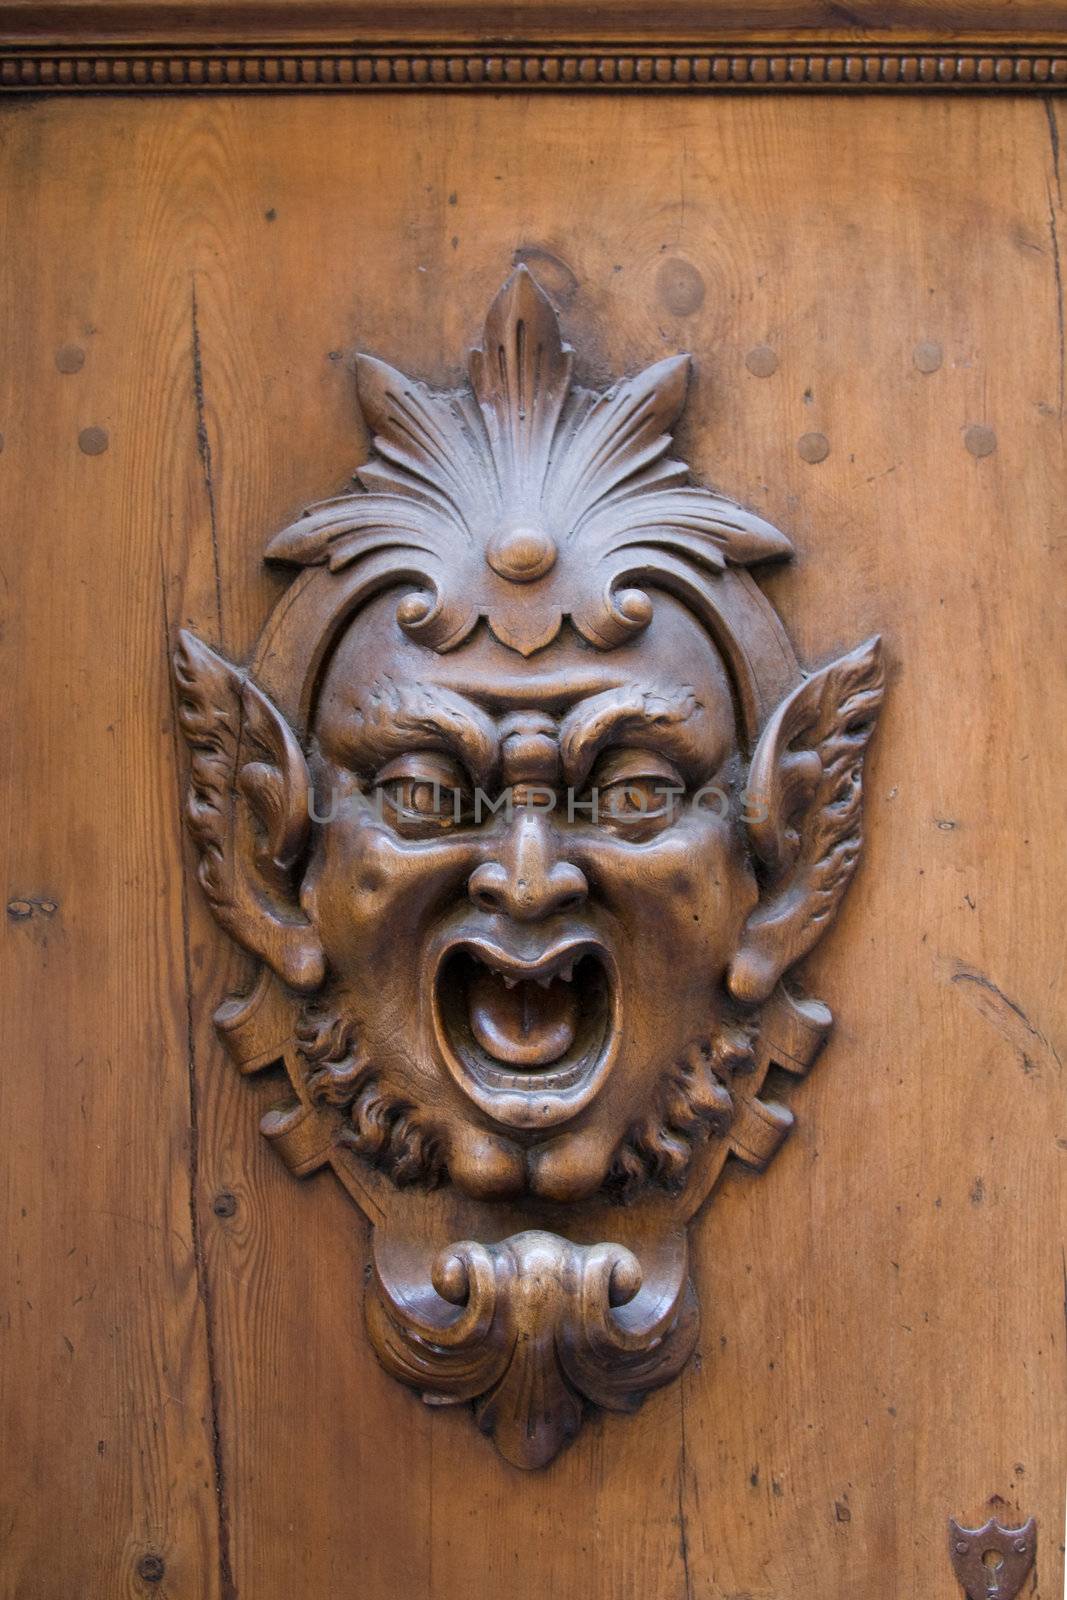 Carved gargoyle adorning a wooden door in Siena, Italy